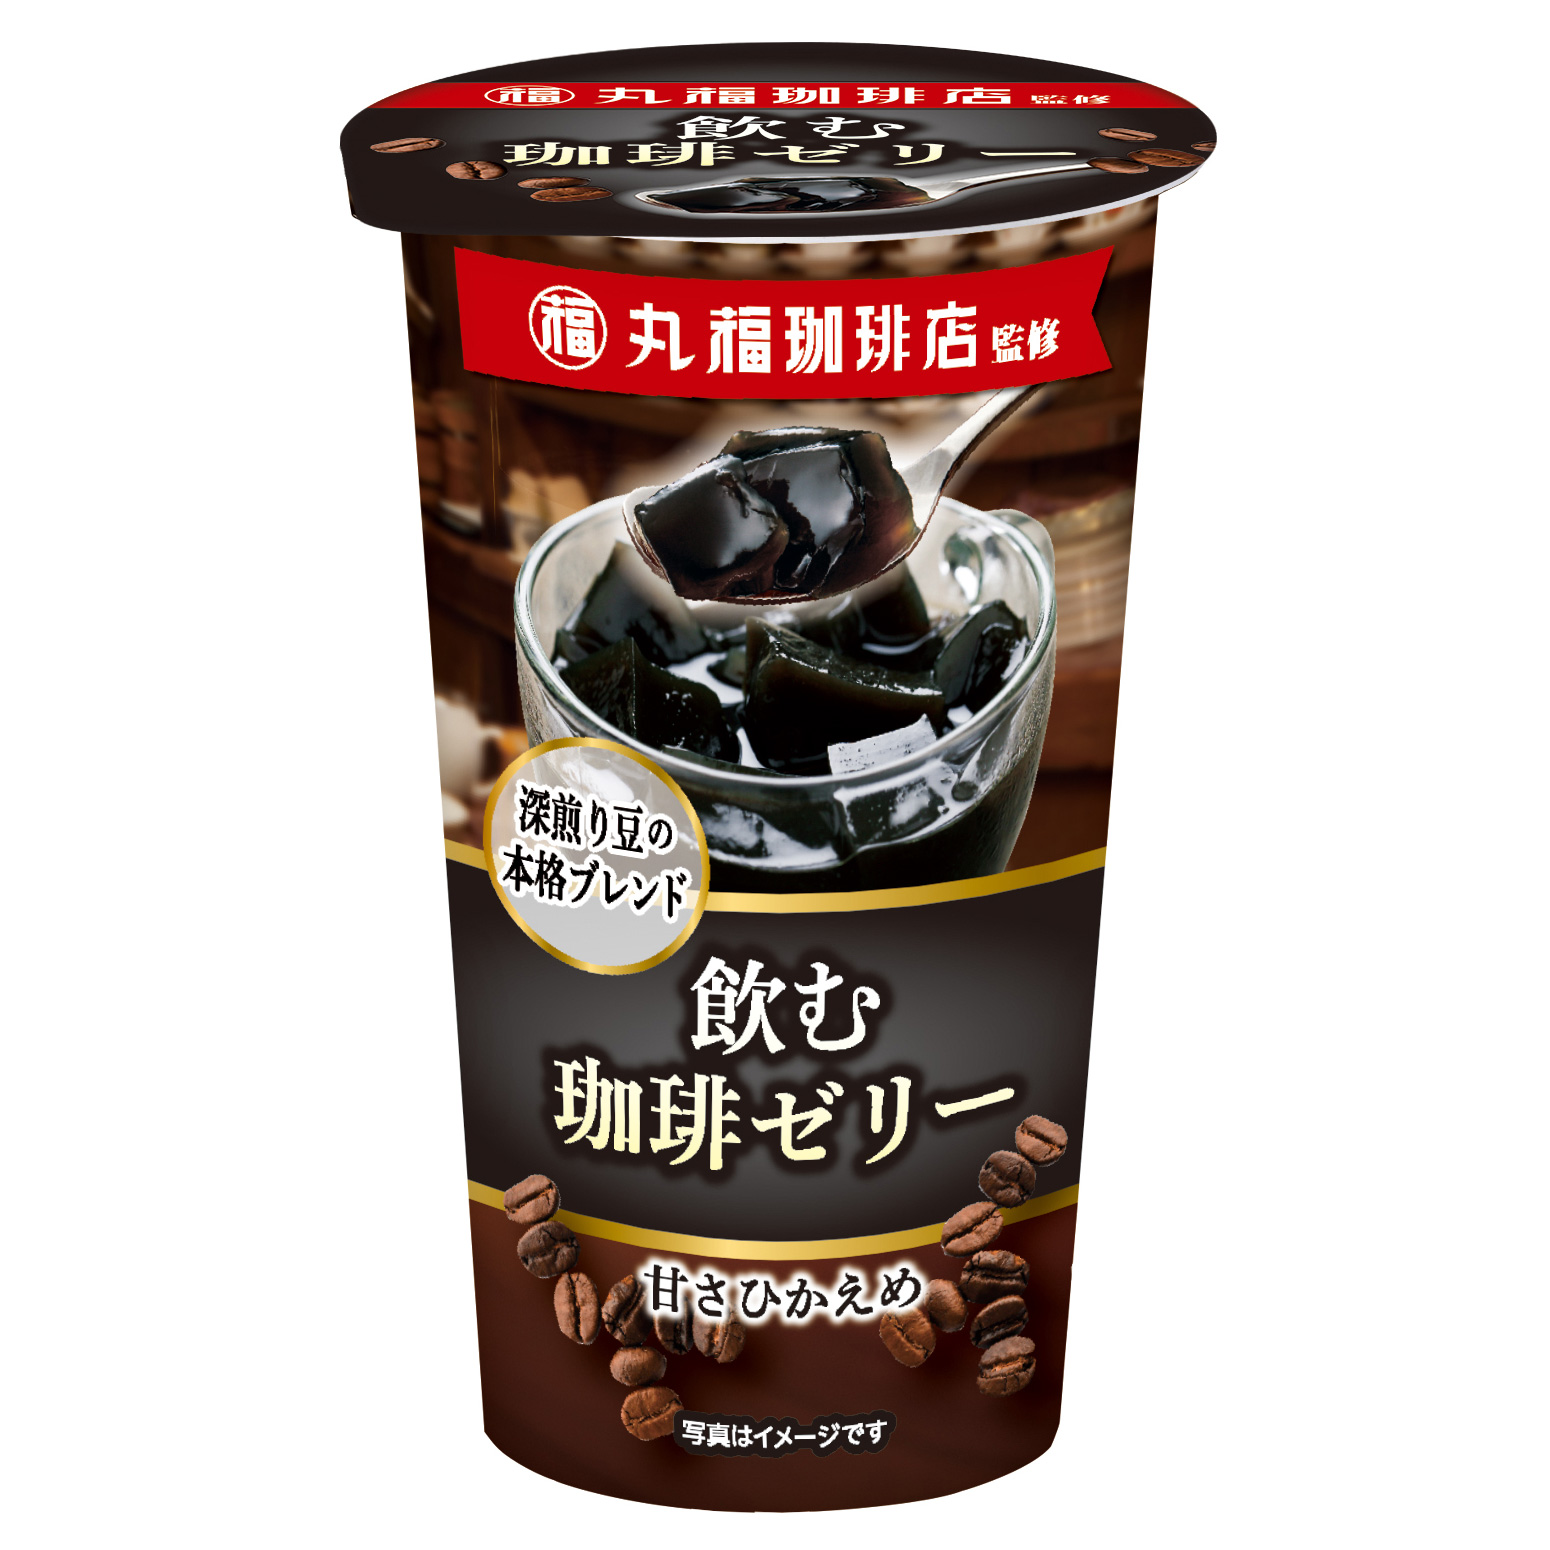 Under Marufuku Coffee supervision Drinkable coffee gelatin treat 200g